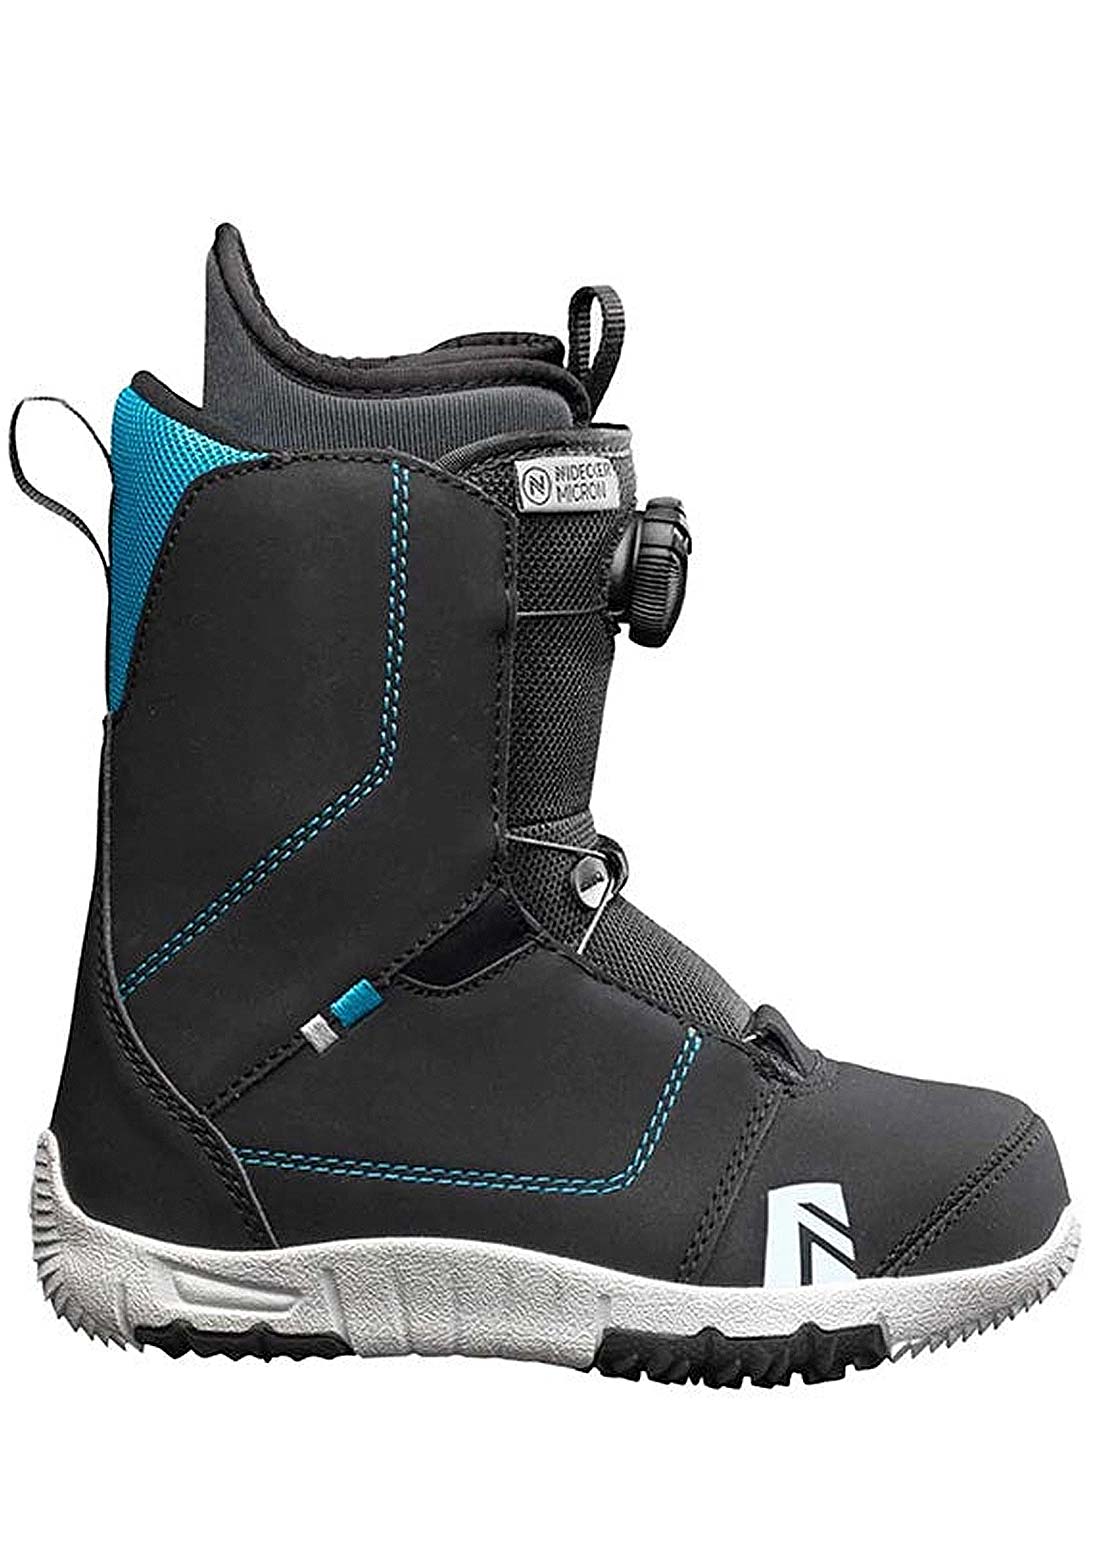 Nidecker Micron Snow Boots Black